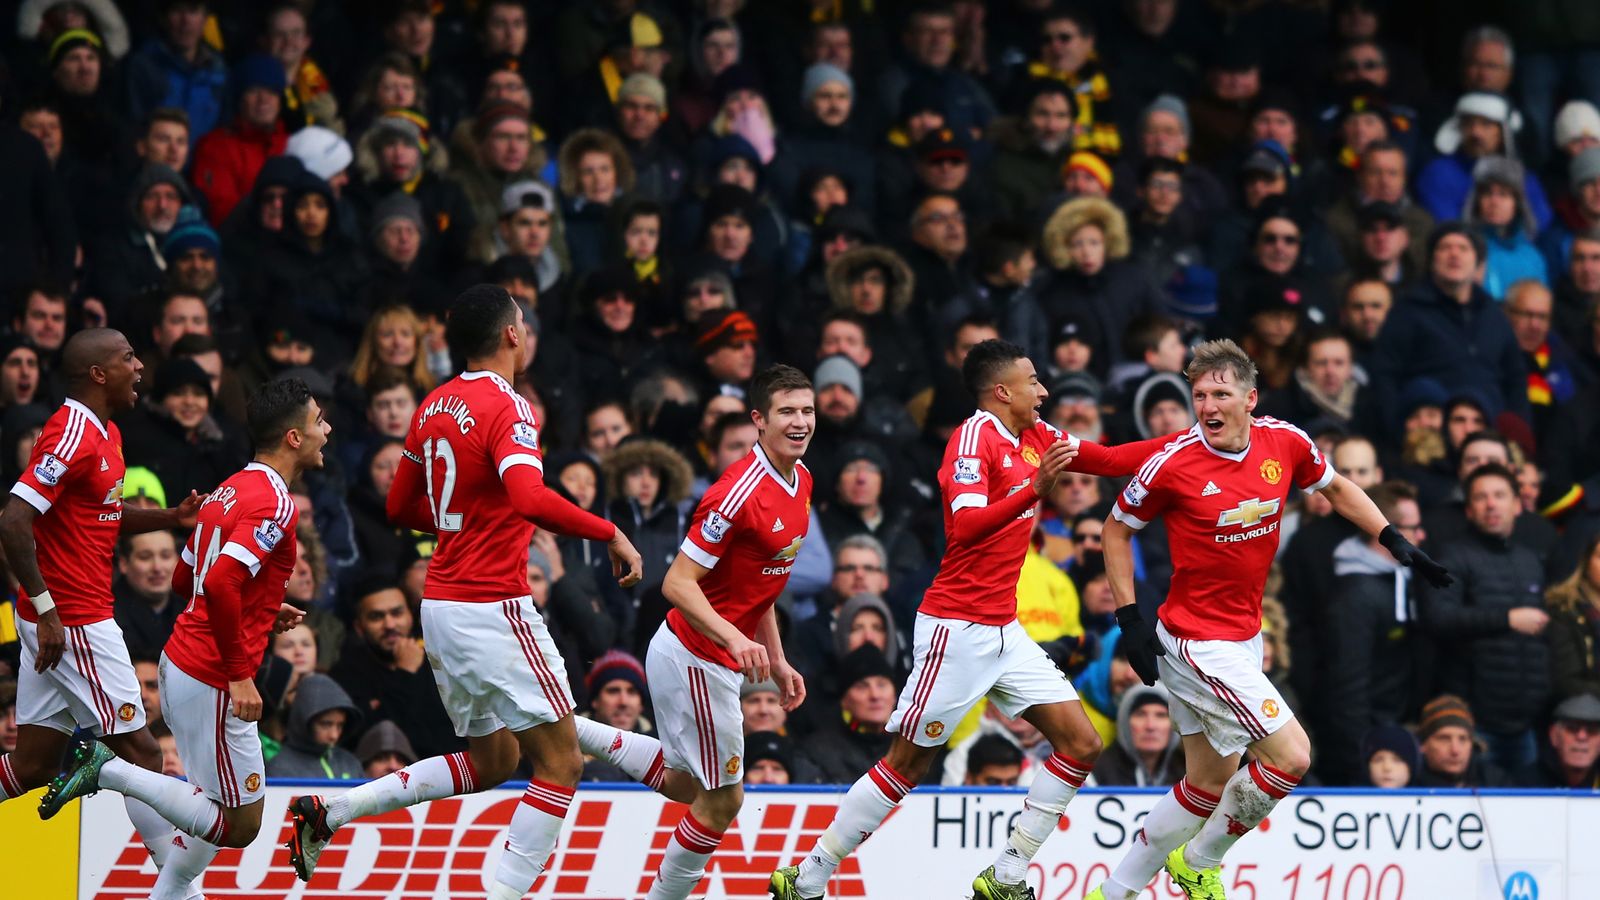 Watford 1 - 2 Man Utd - Match Report & Highlights